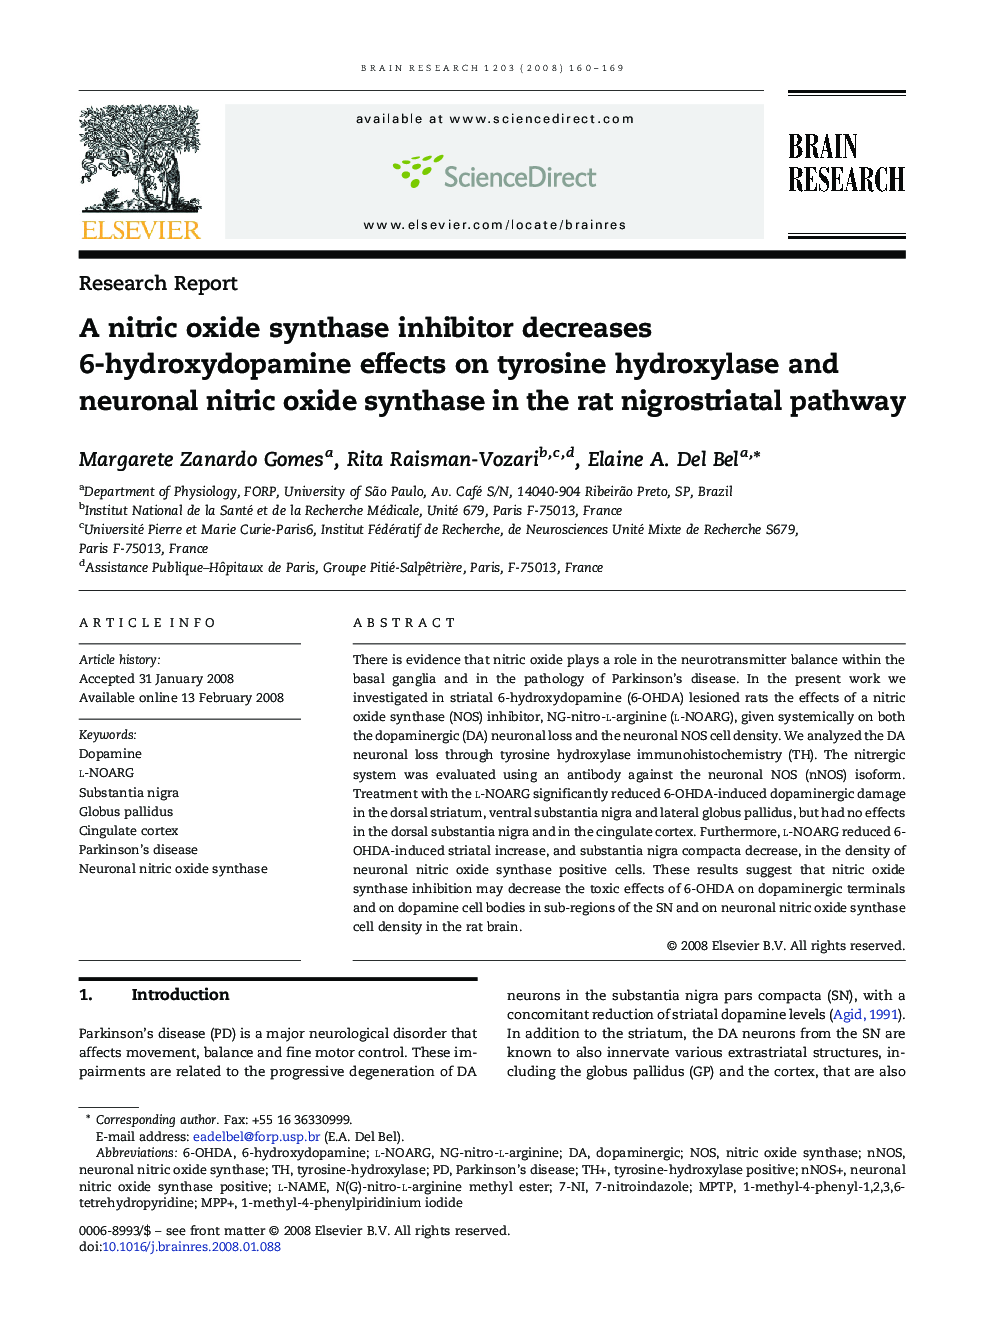 A nitric oxide synthase inhibitor decreases 6-hydroxydopamine effects on tyrosine hydroxylase and neuronal nitric oxide synthase in the rat nigrostriatal pathway